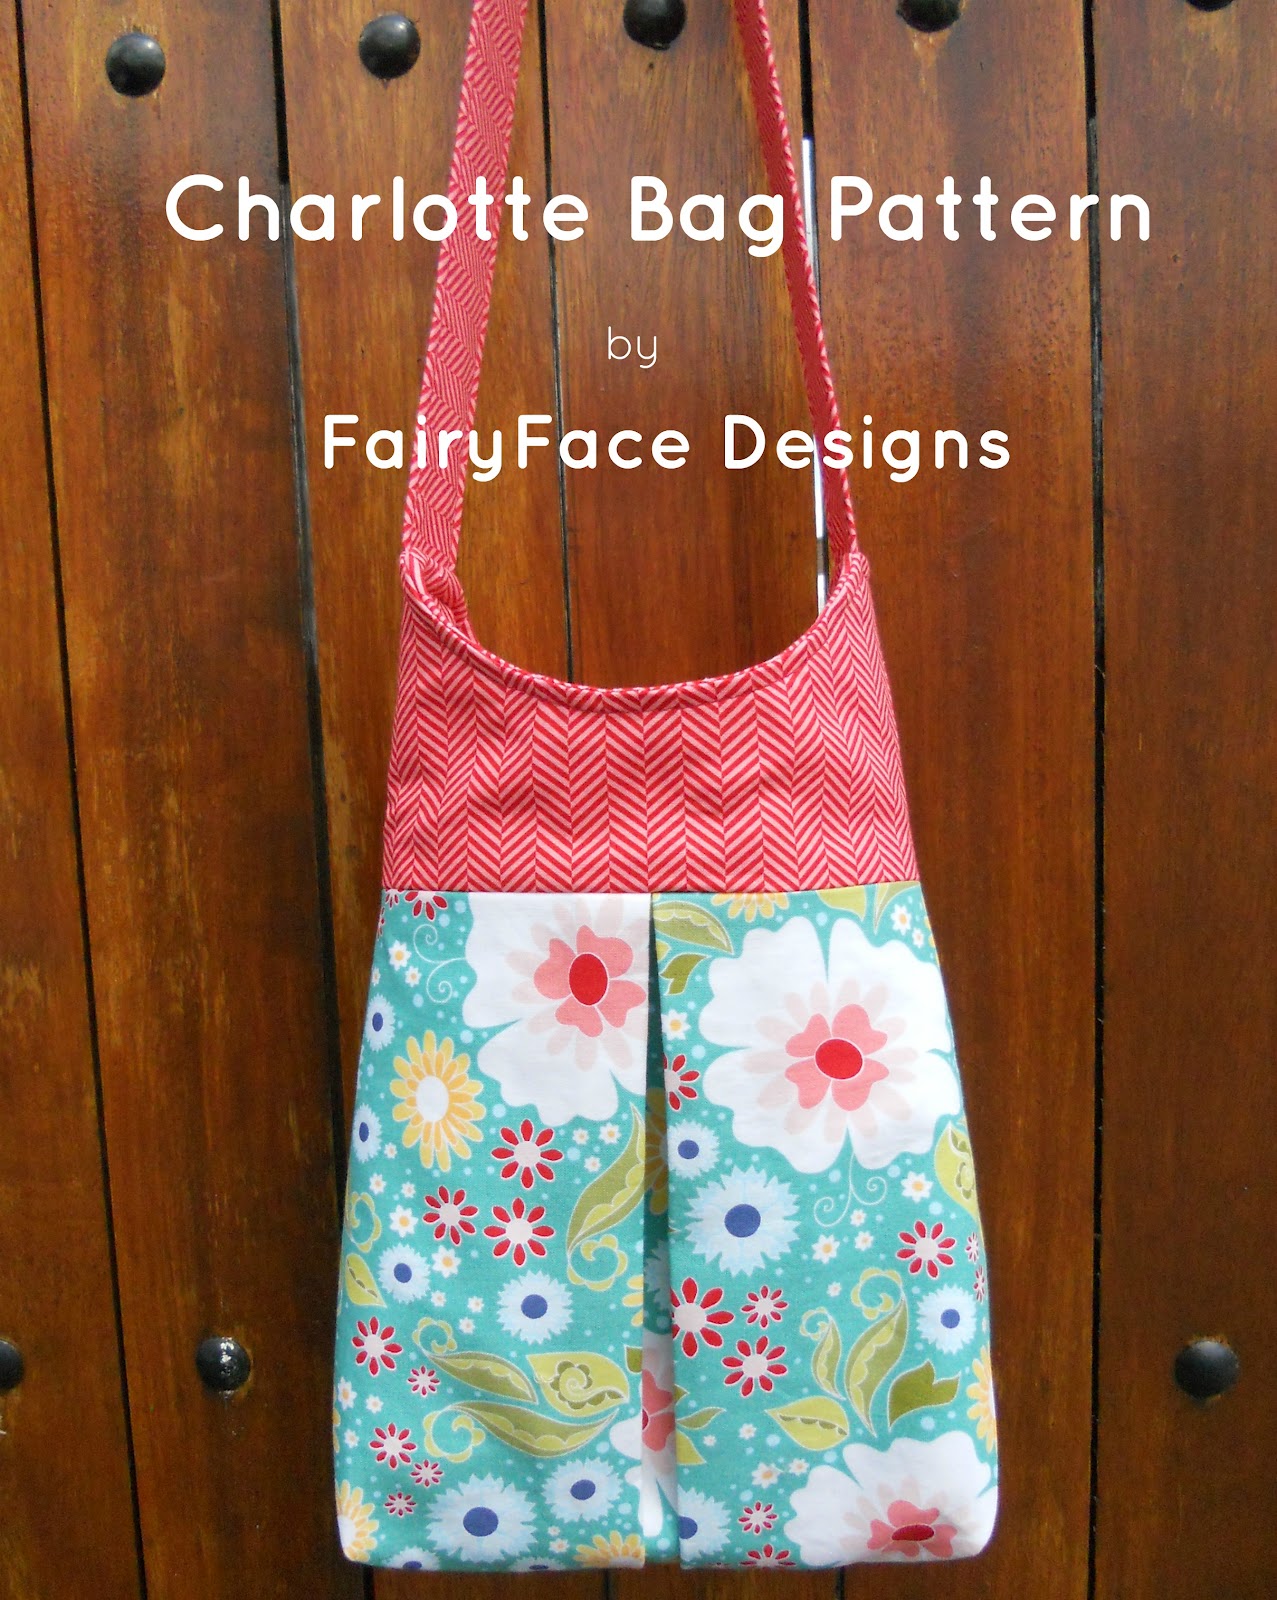 FairyFace Designs: Charlotte Bag Pattern